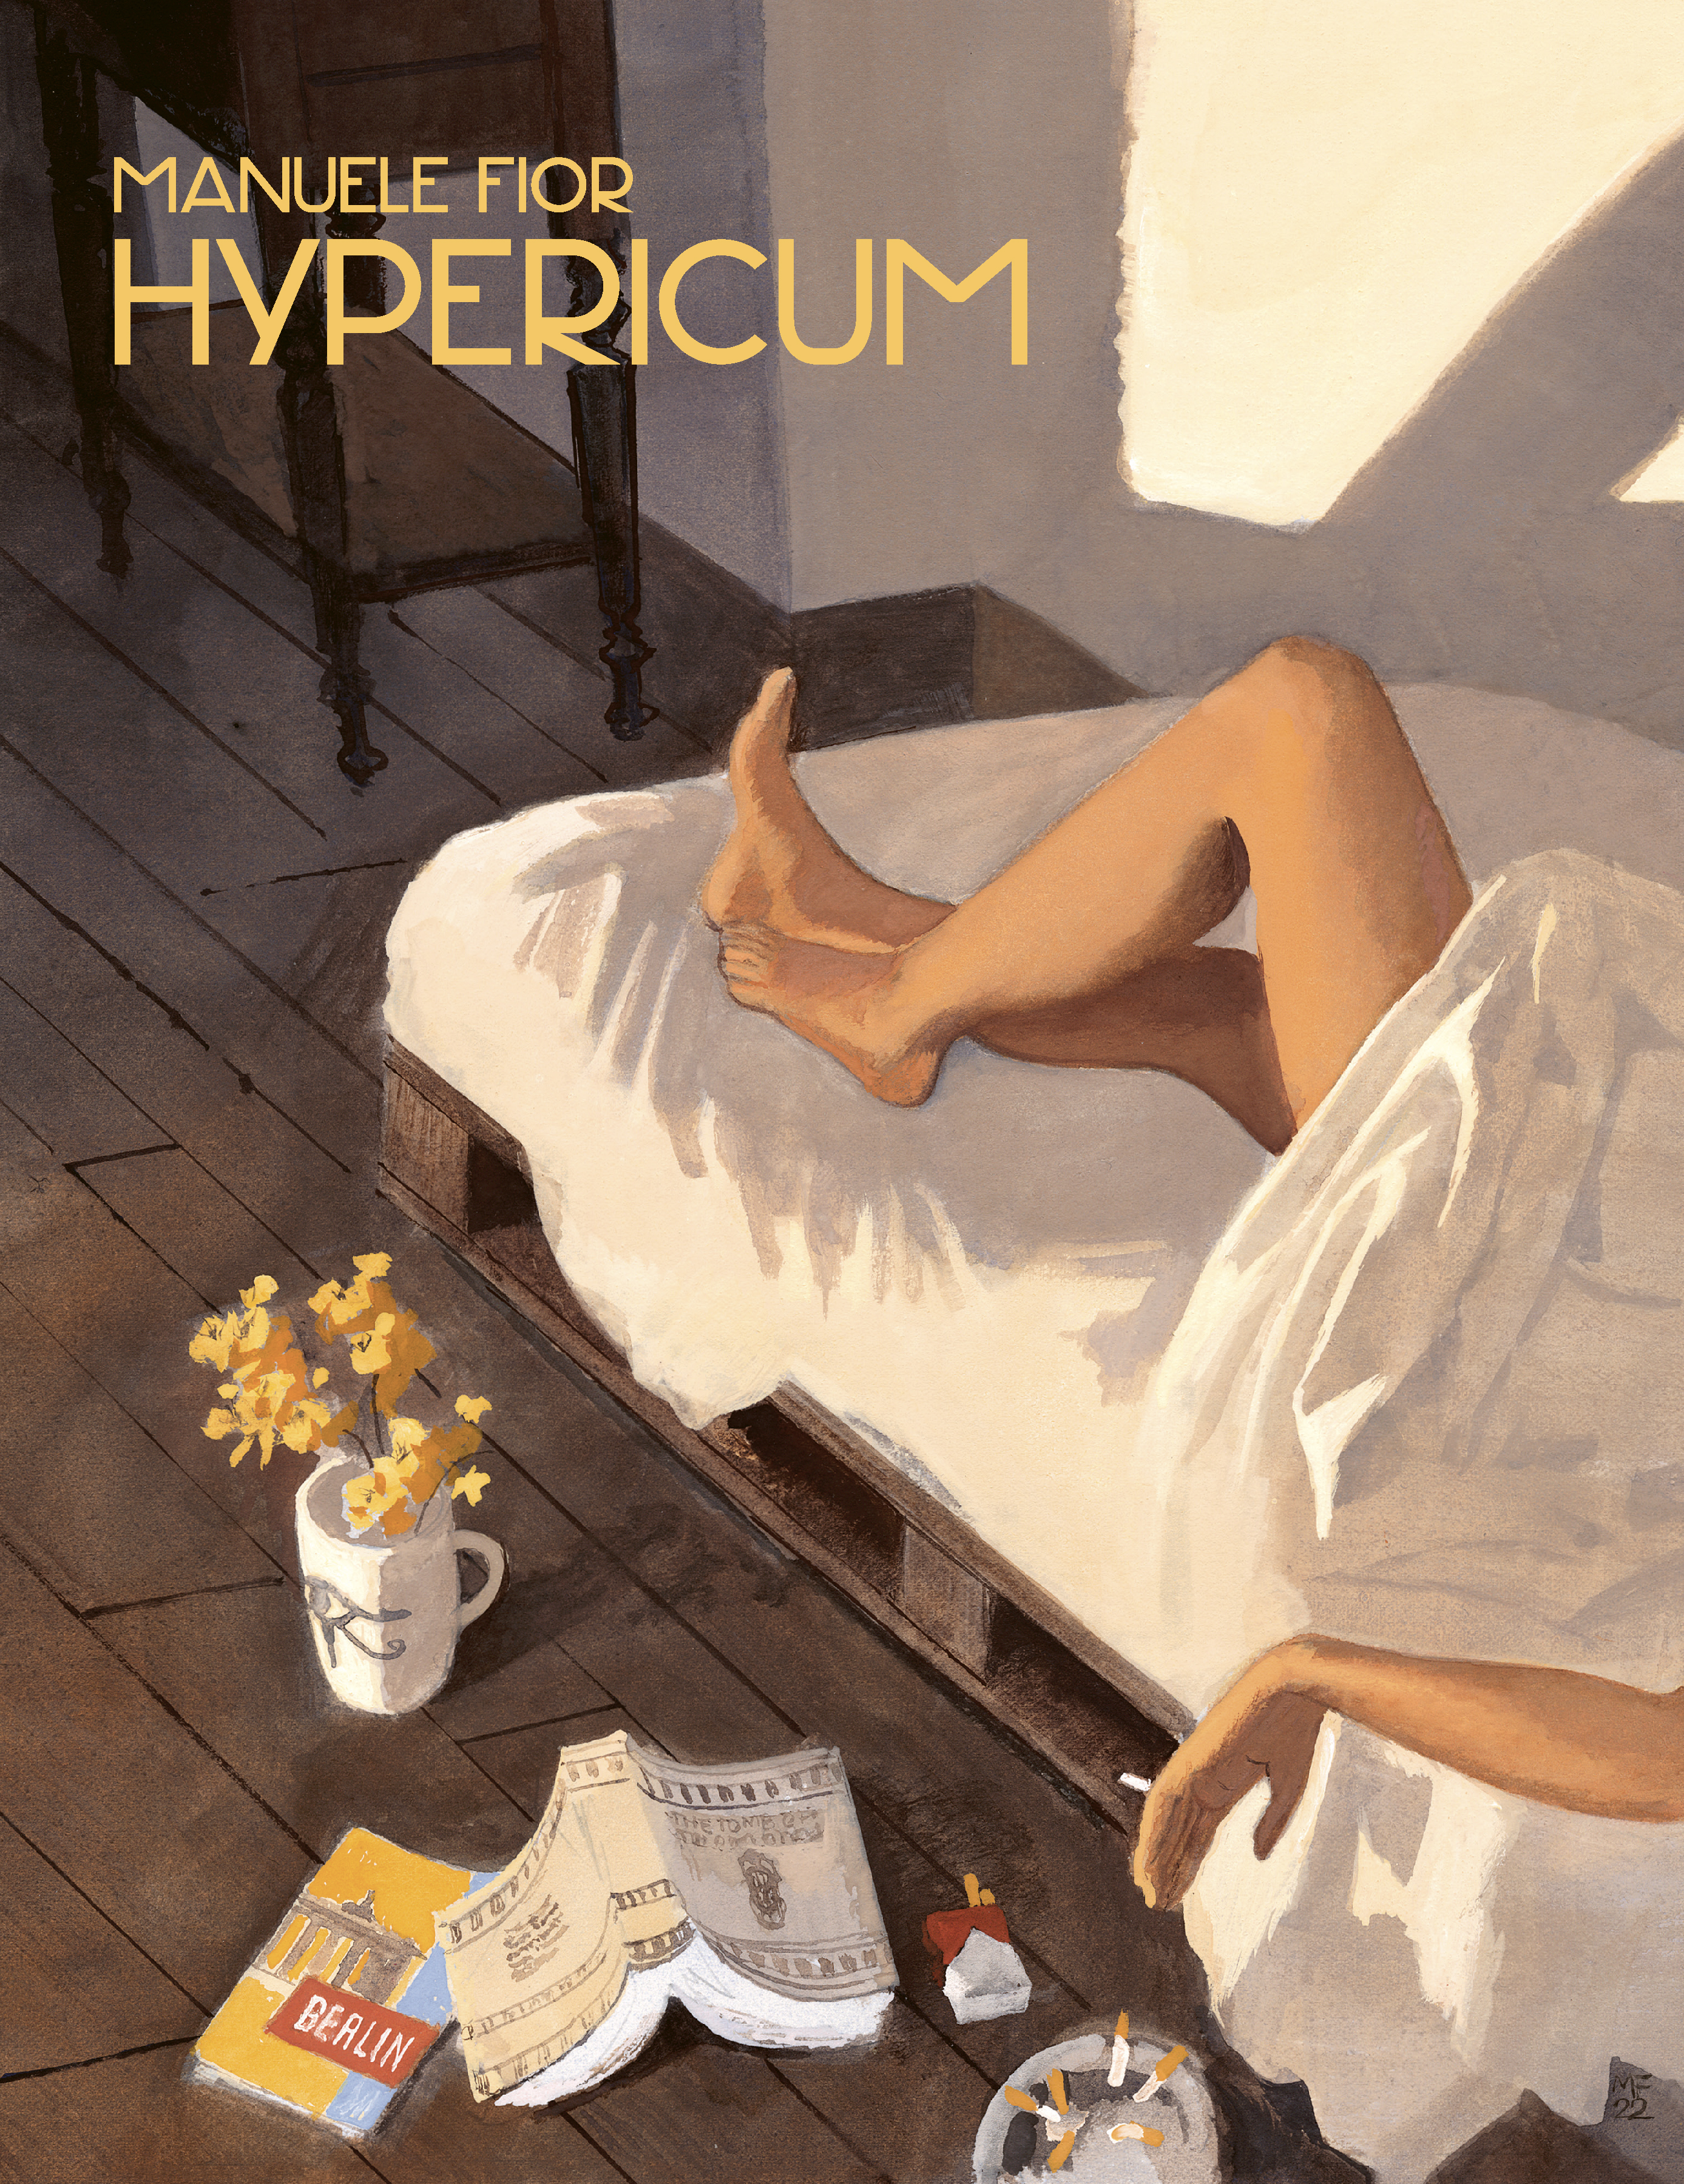 Hypericum Hardcover Graphic Novel (Mature)